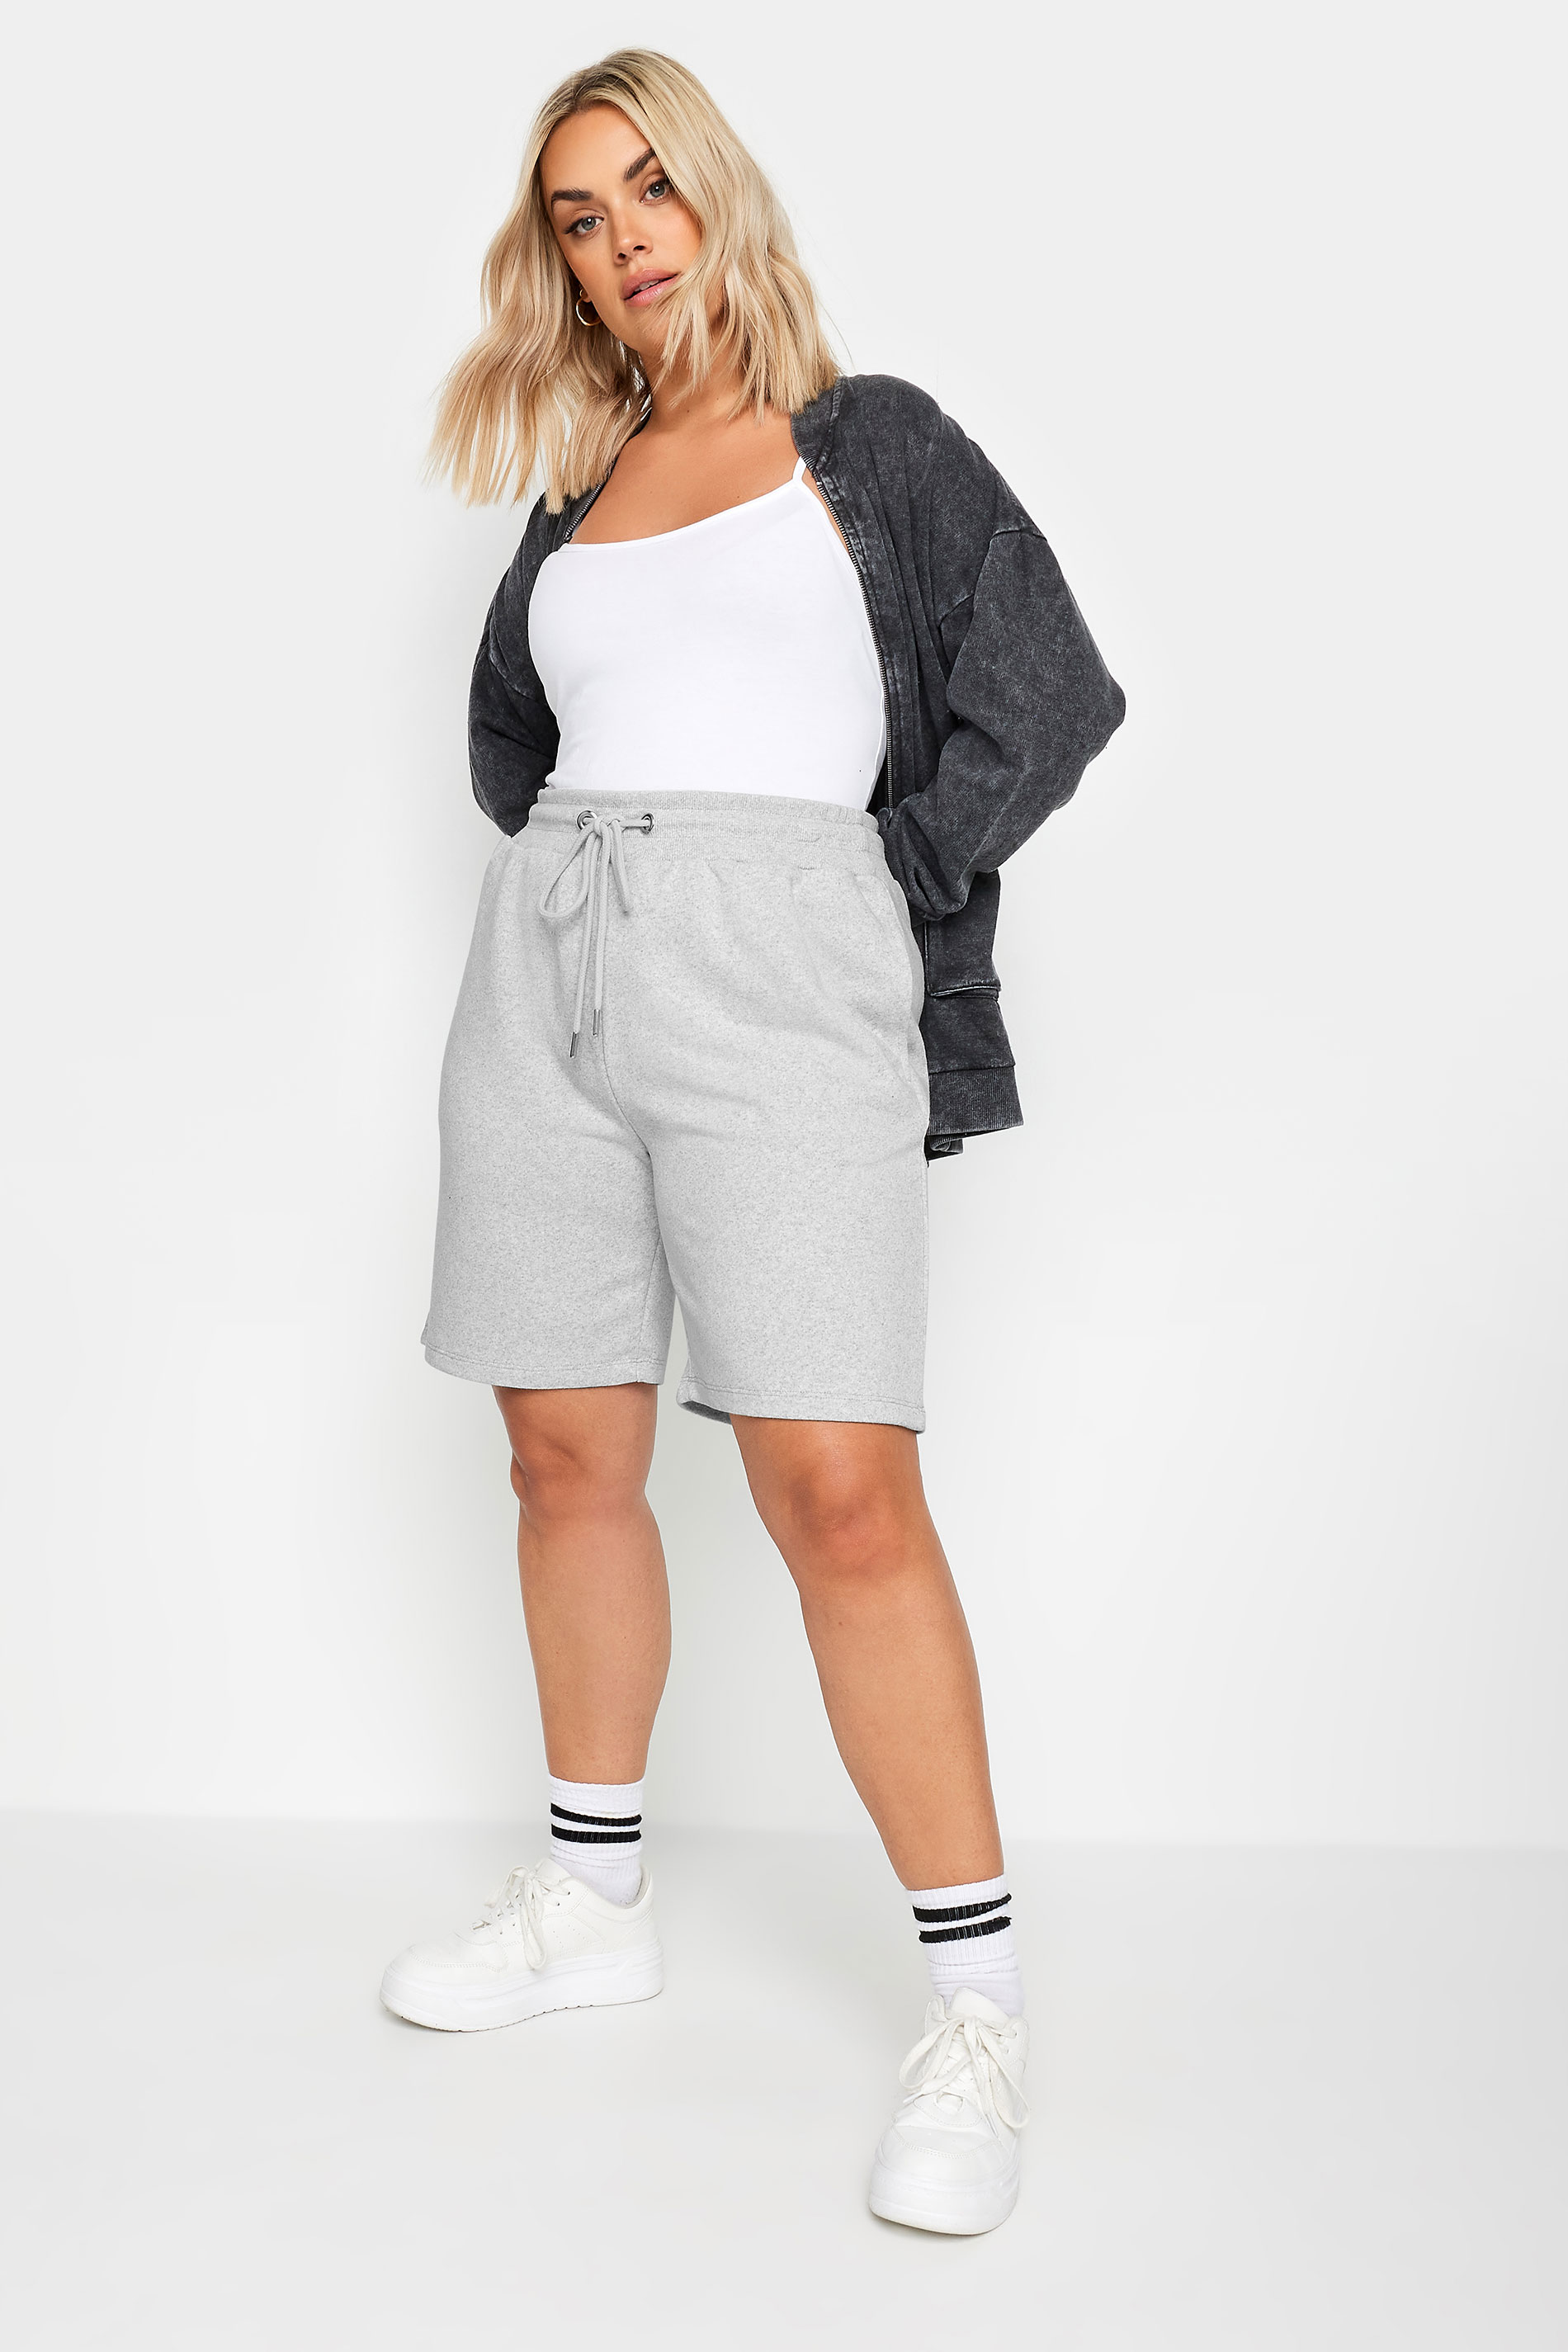 YOURS Plus Size Light Grey Elasticated Jogger Shorts | Yours Clothing 2